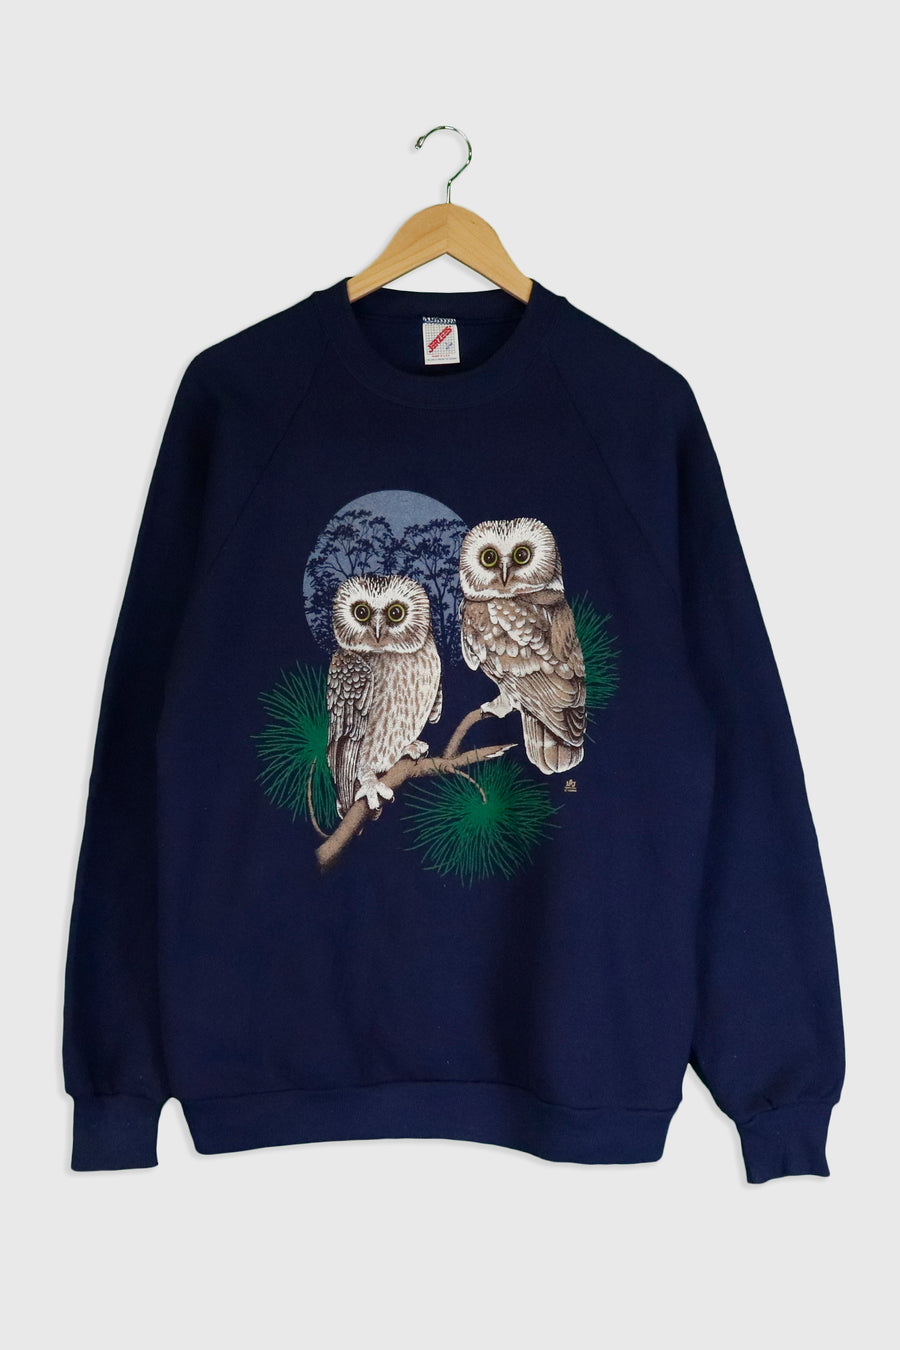 Vintage Owls On Tree Branch Sweatshirt Sz L